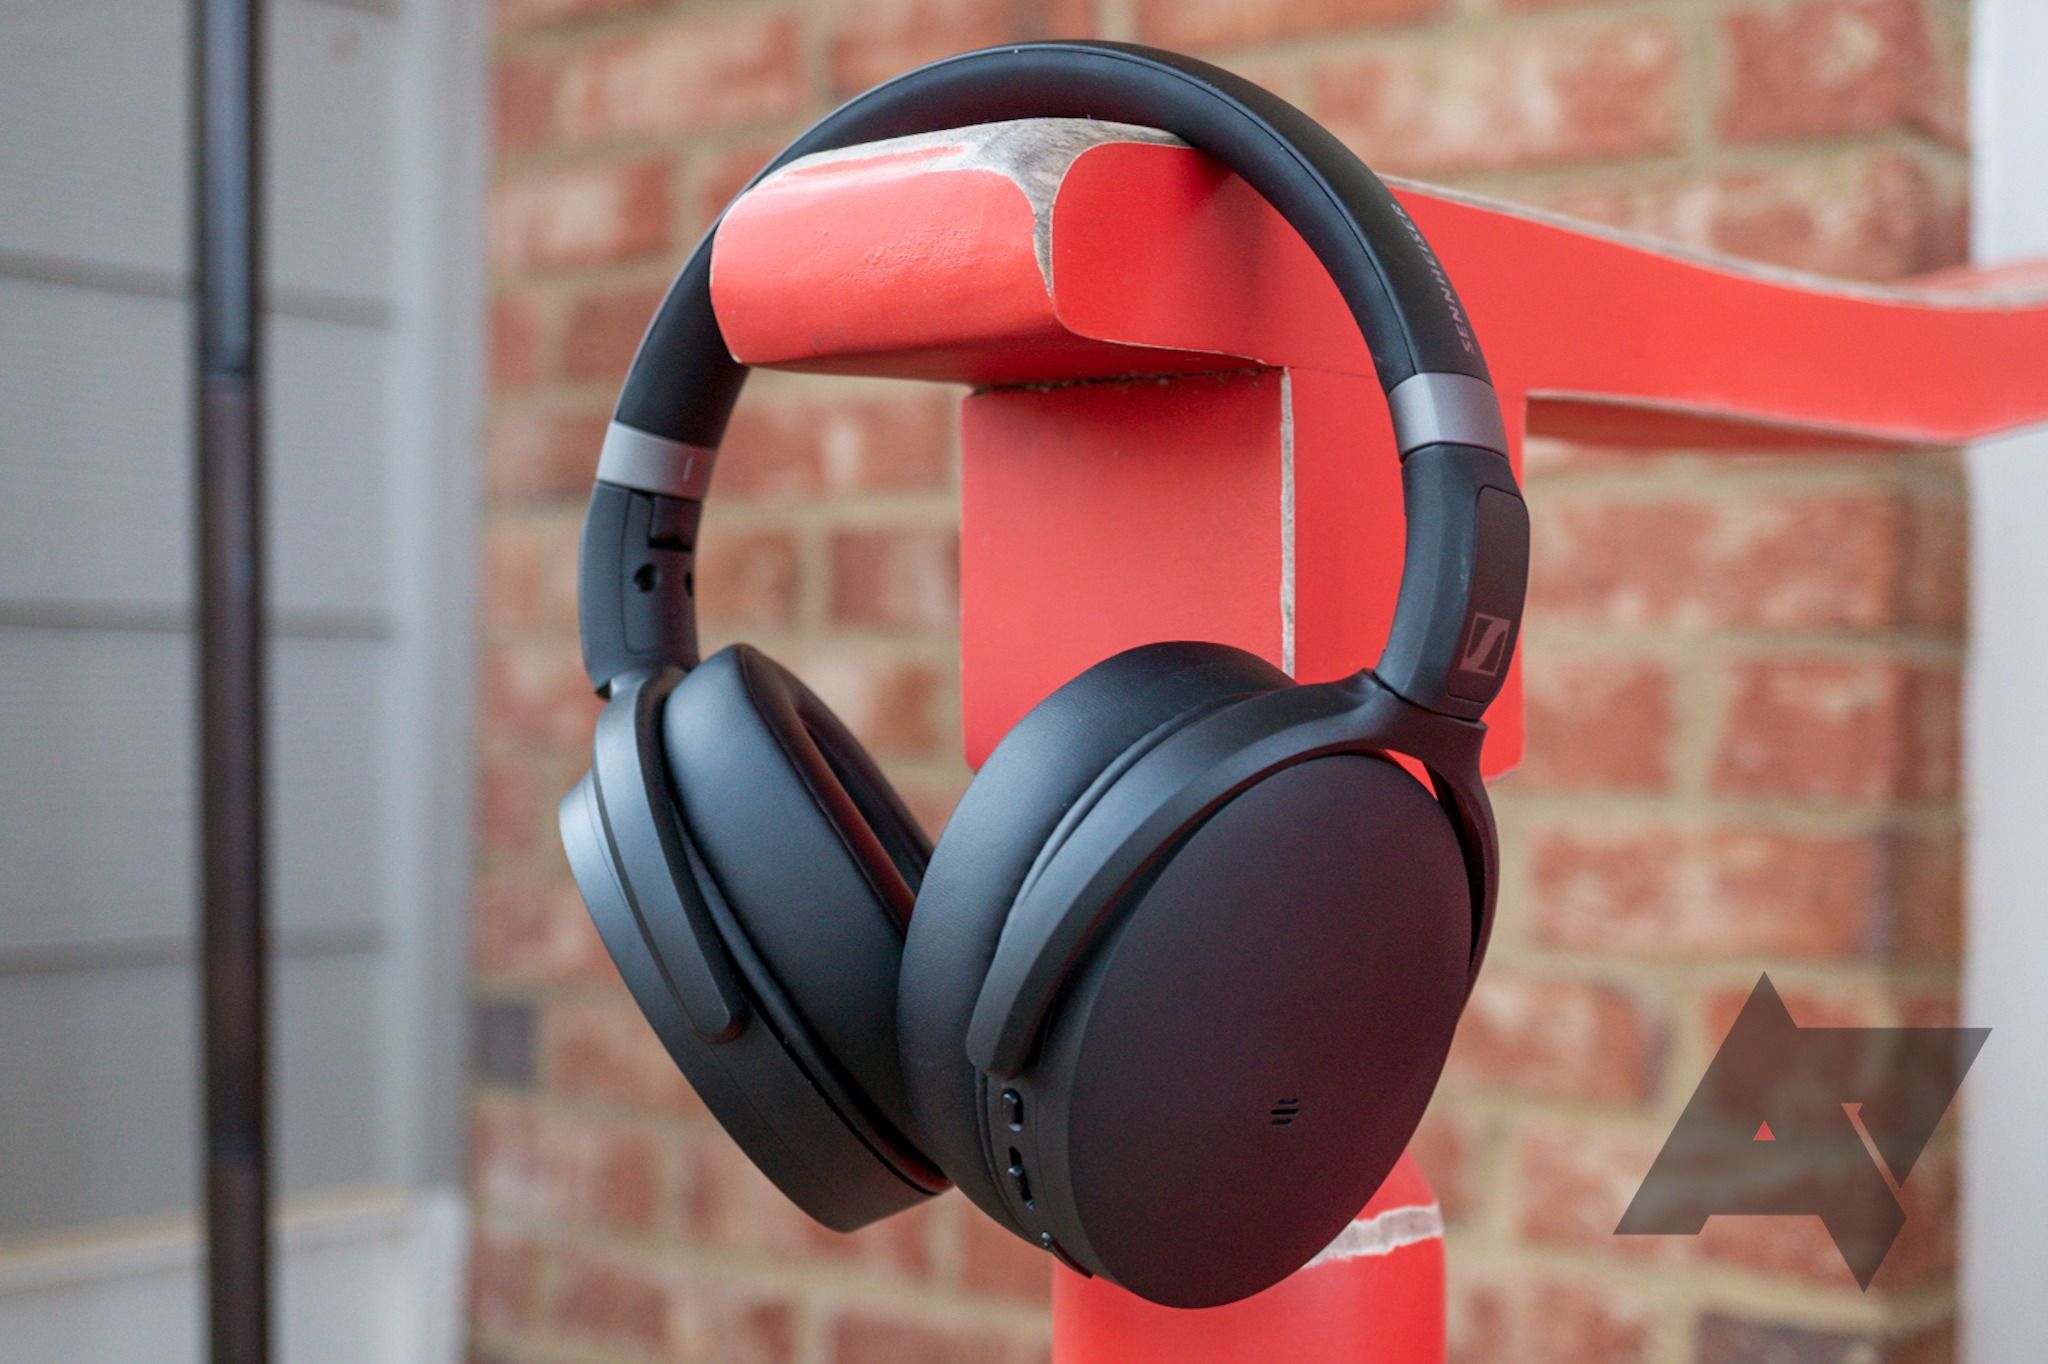 Sennheiser HD 450BT headphone review: Clean sound and design - Gearbrain